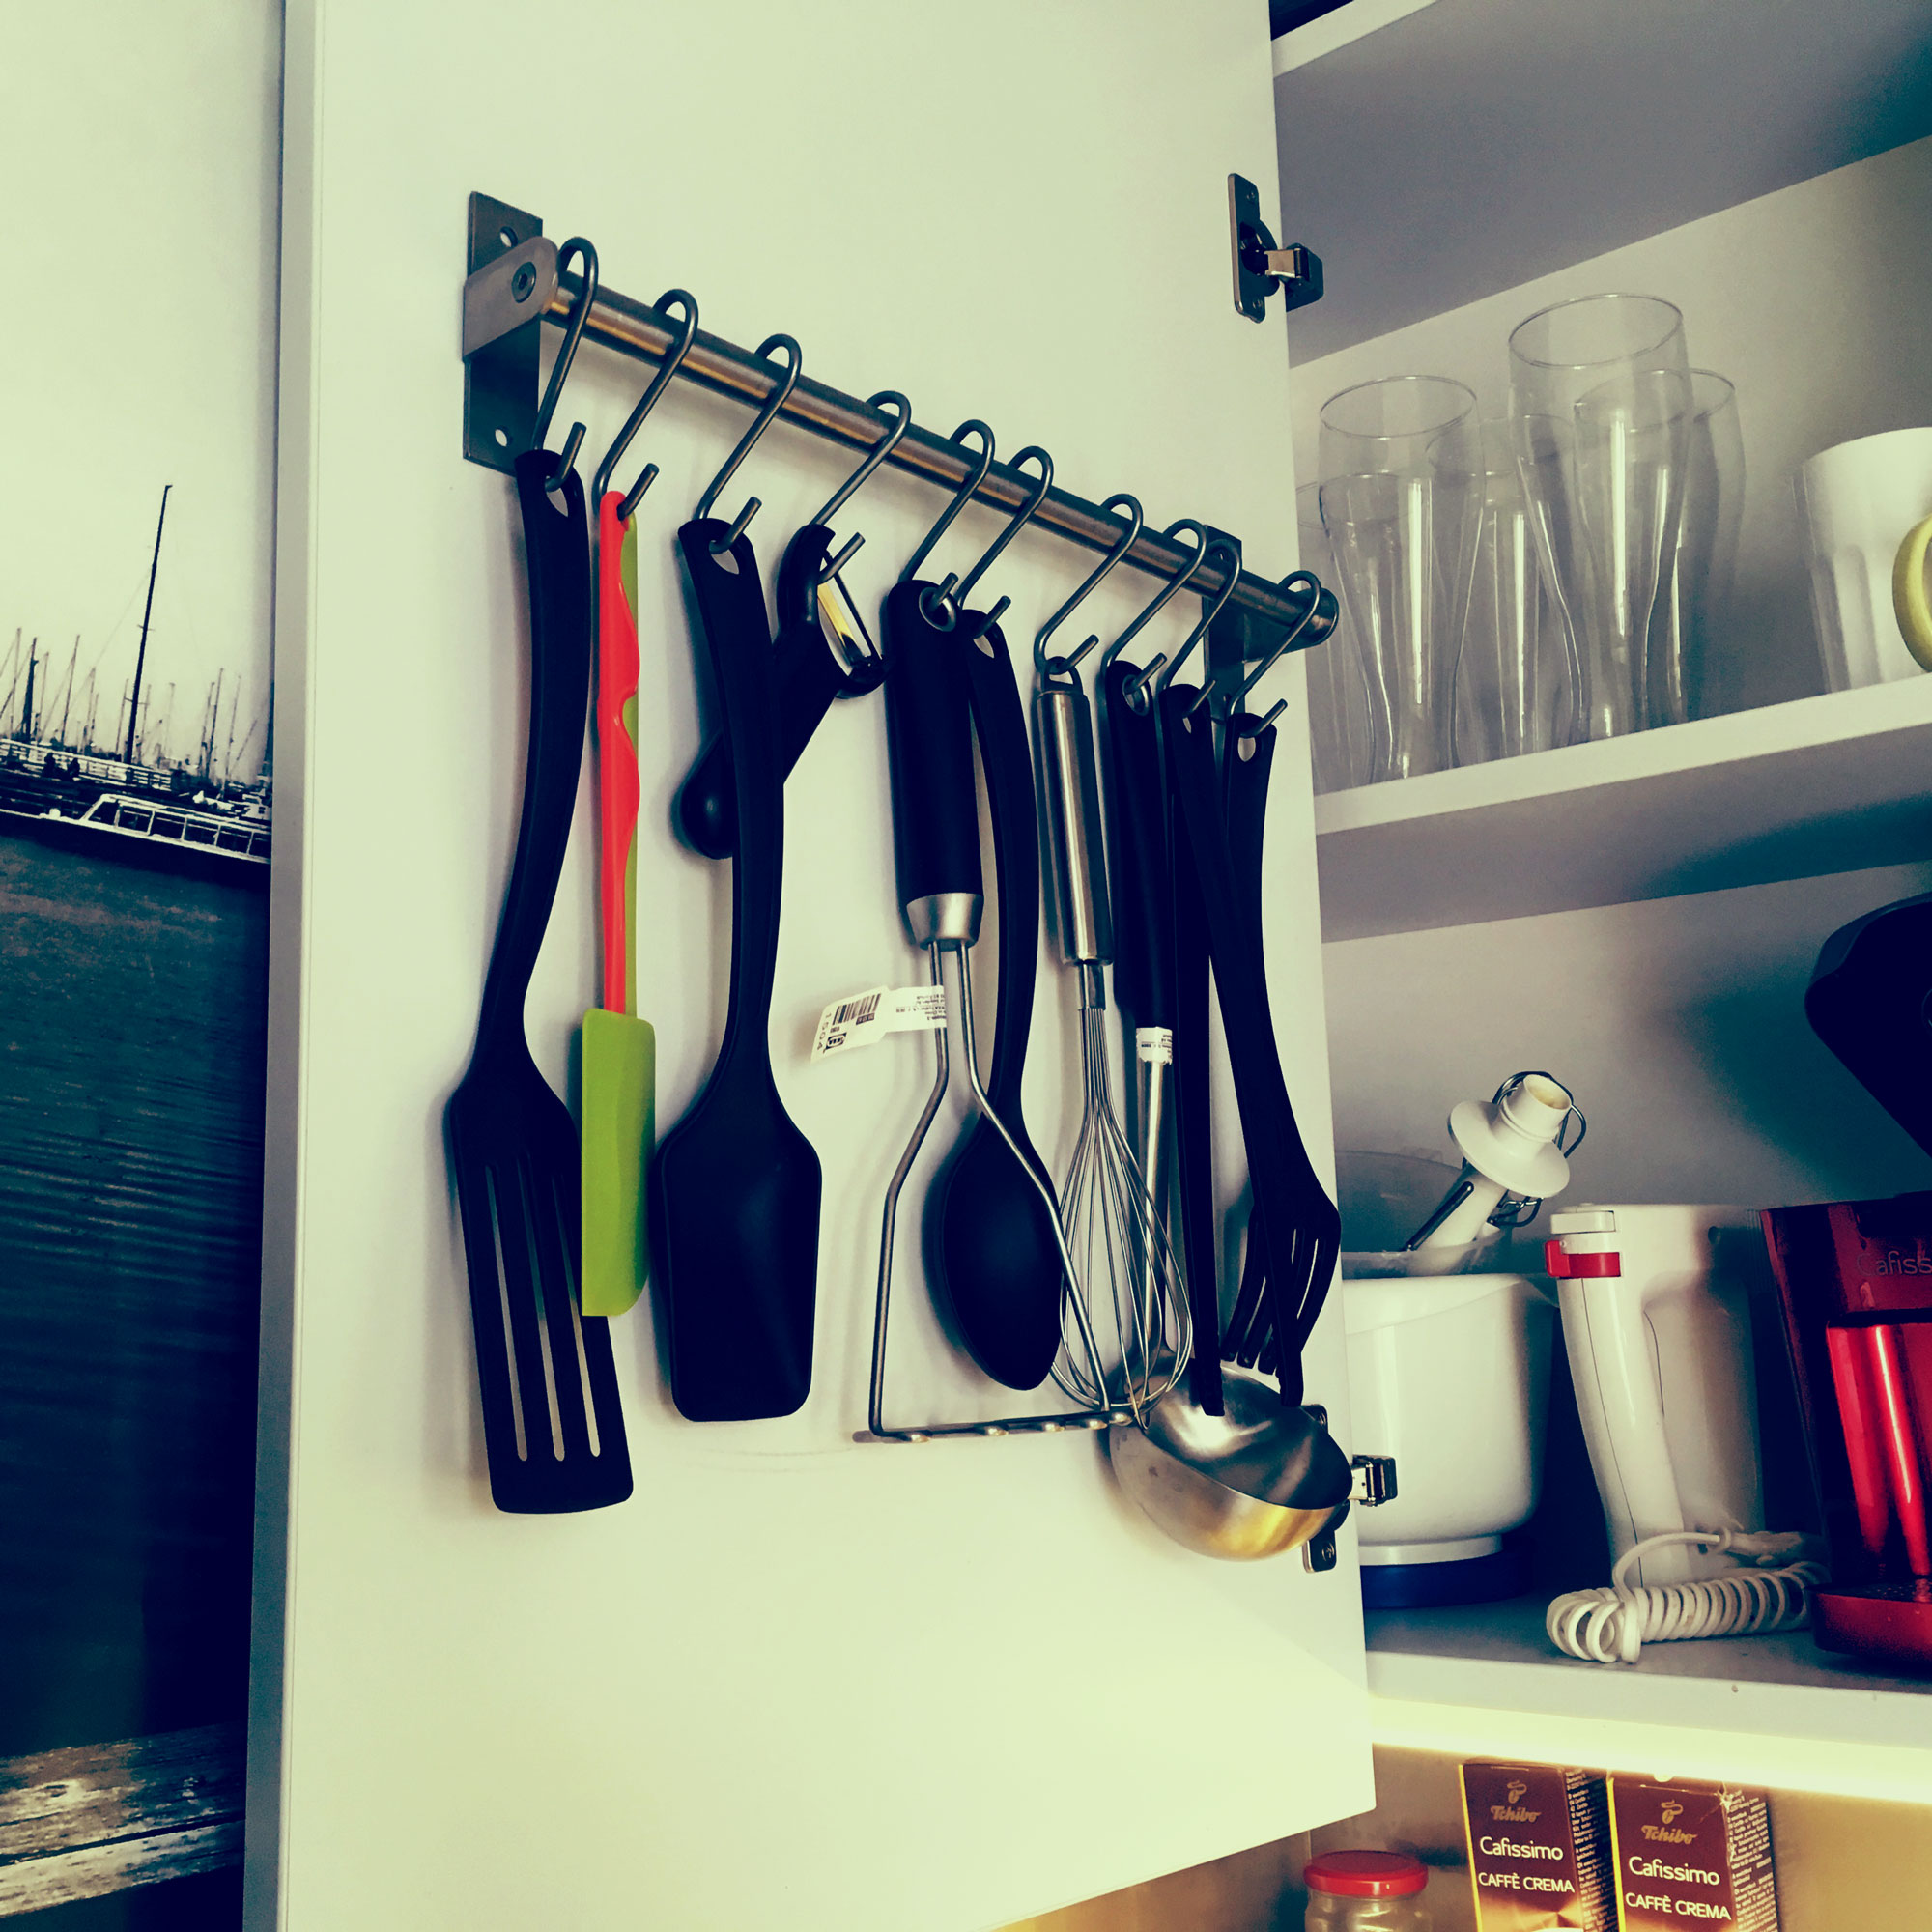 [:de]Bungalowidee: Küchenhelfer[:en]Bungalow idea - Kitchen tools[:]